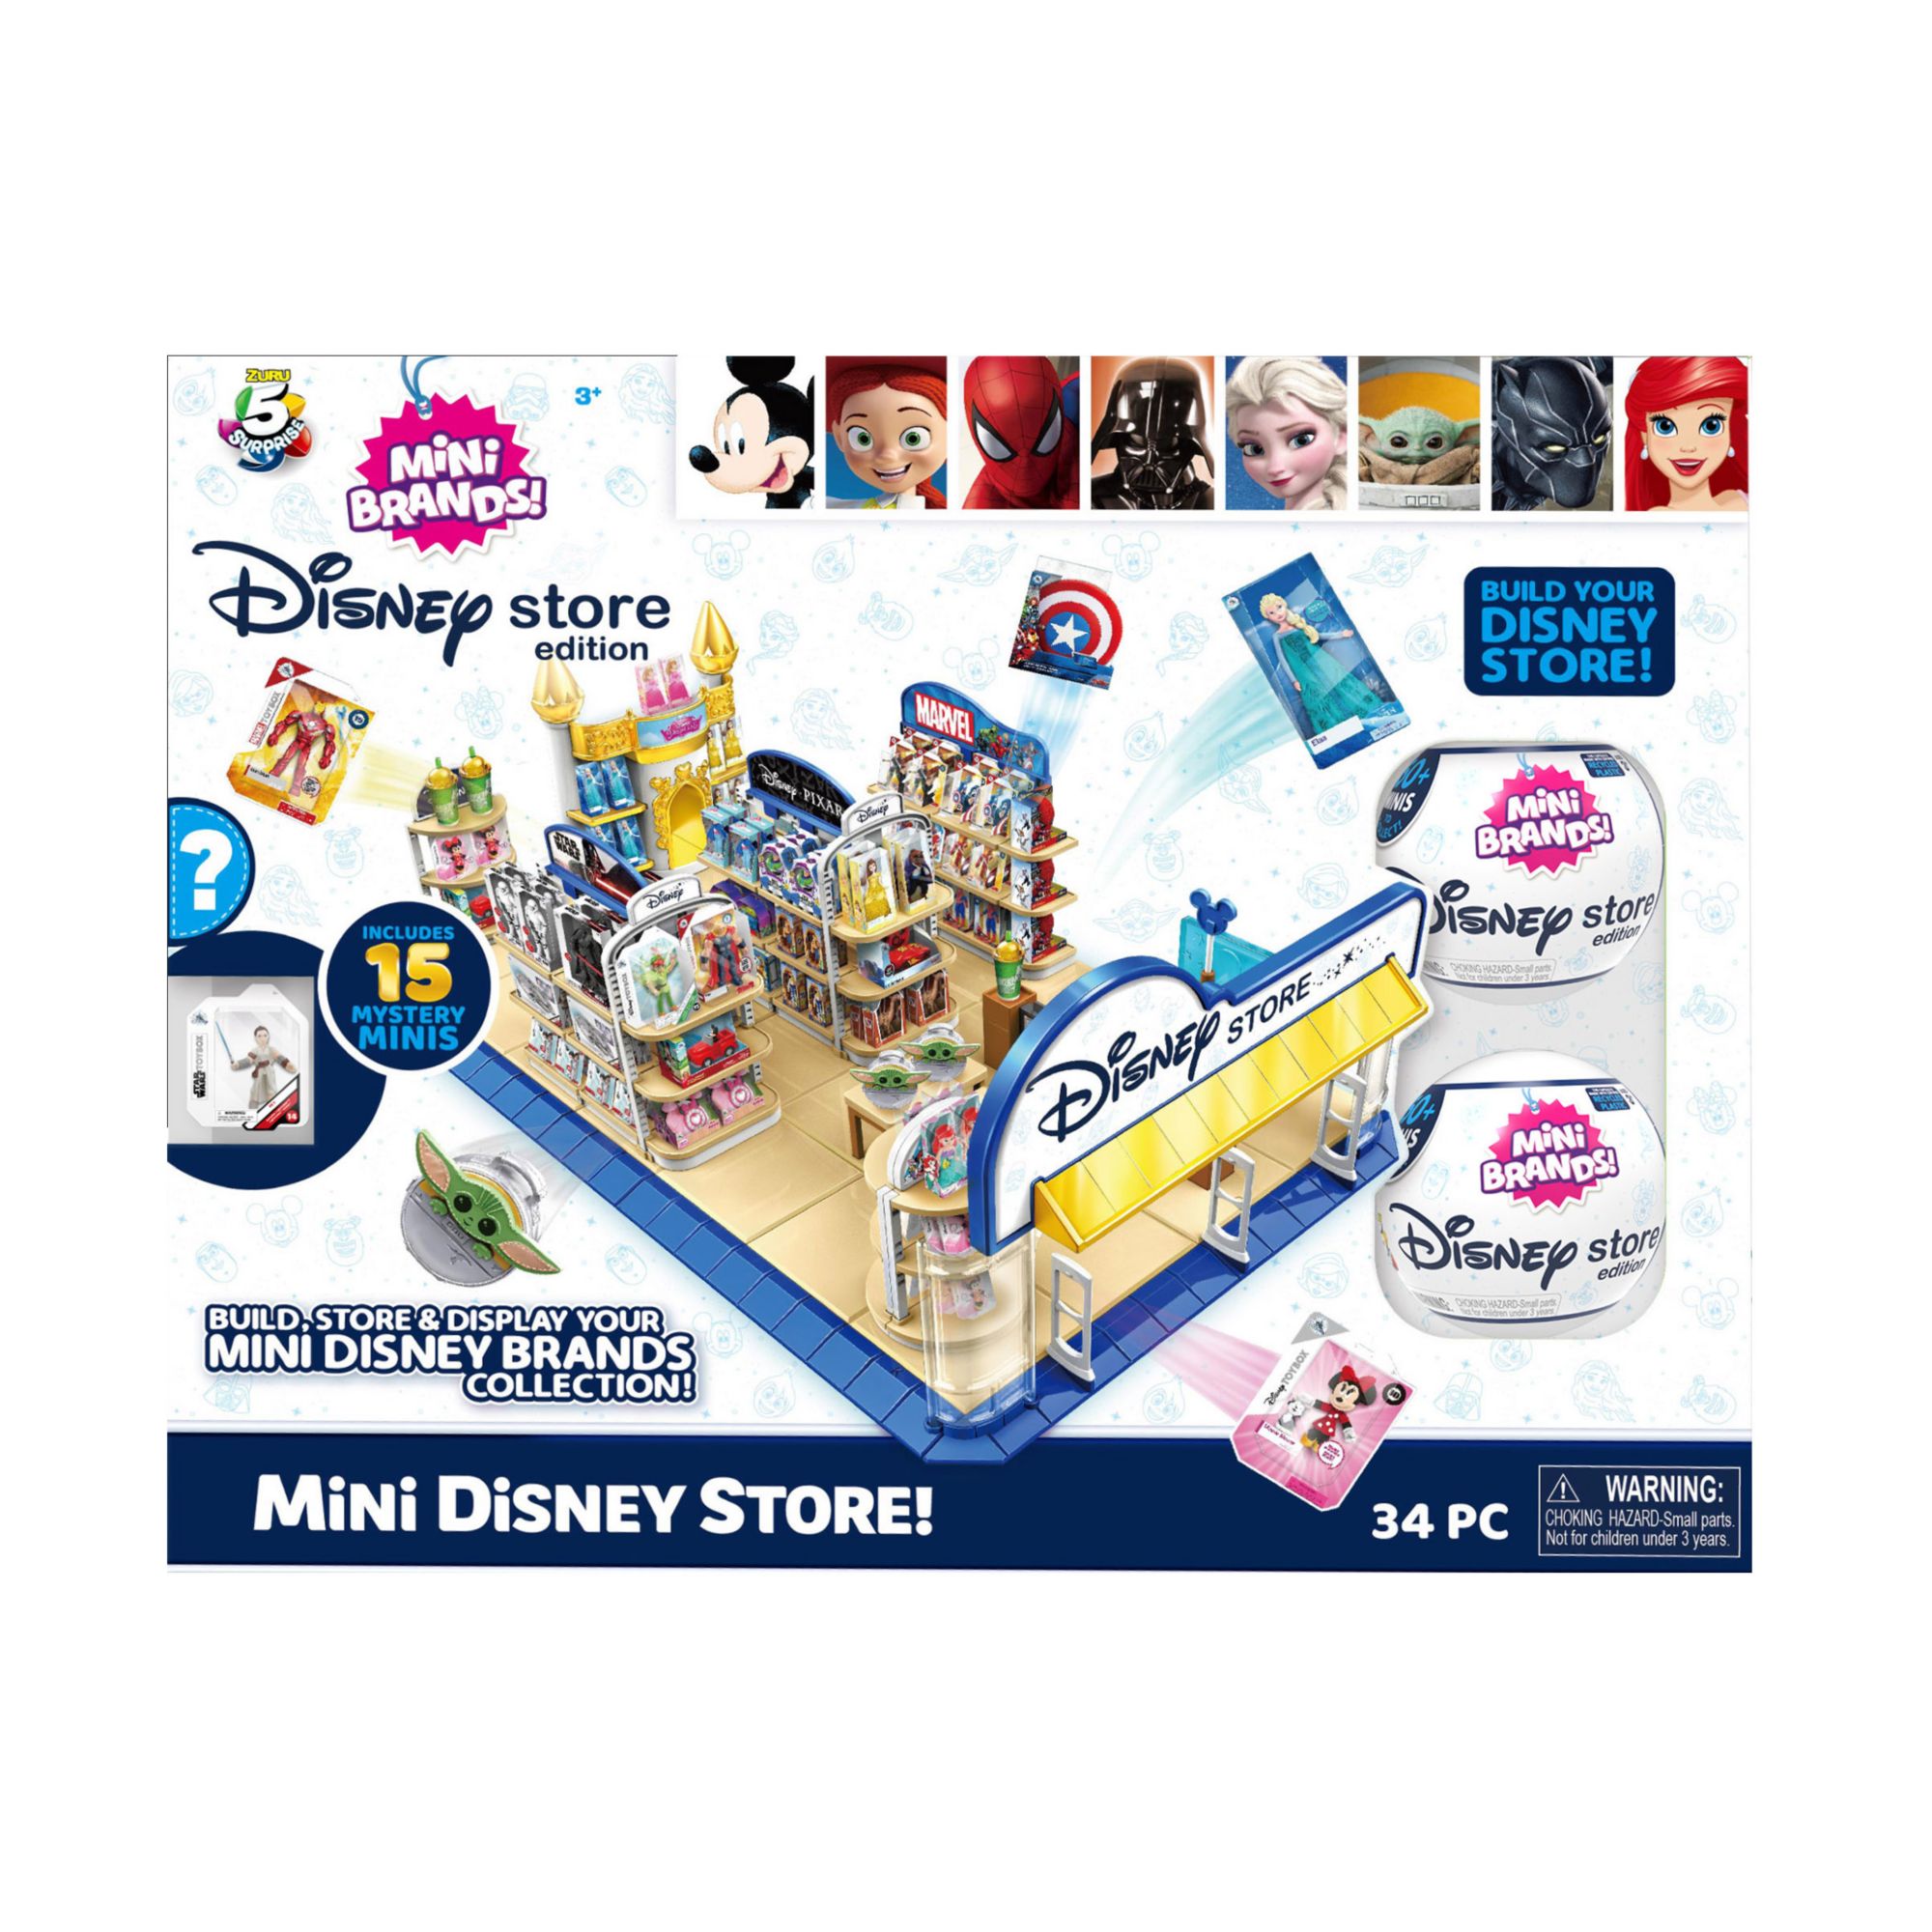 Mini Brands Disney Store Series 1 AND 2 Pick Your Toy 5 Surprise ZURU